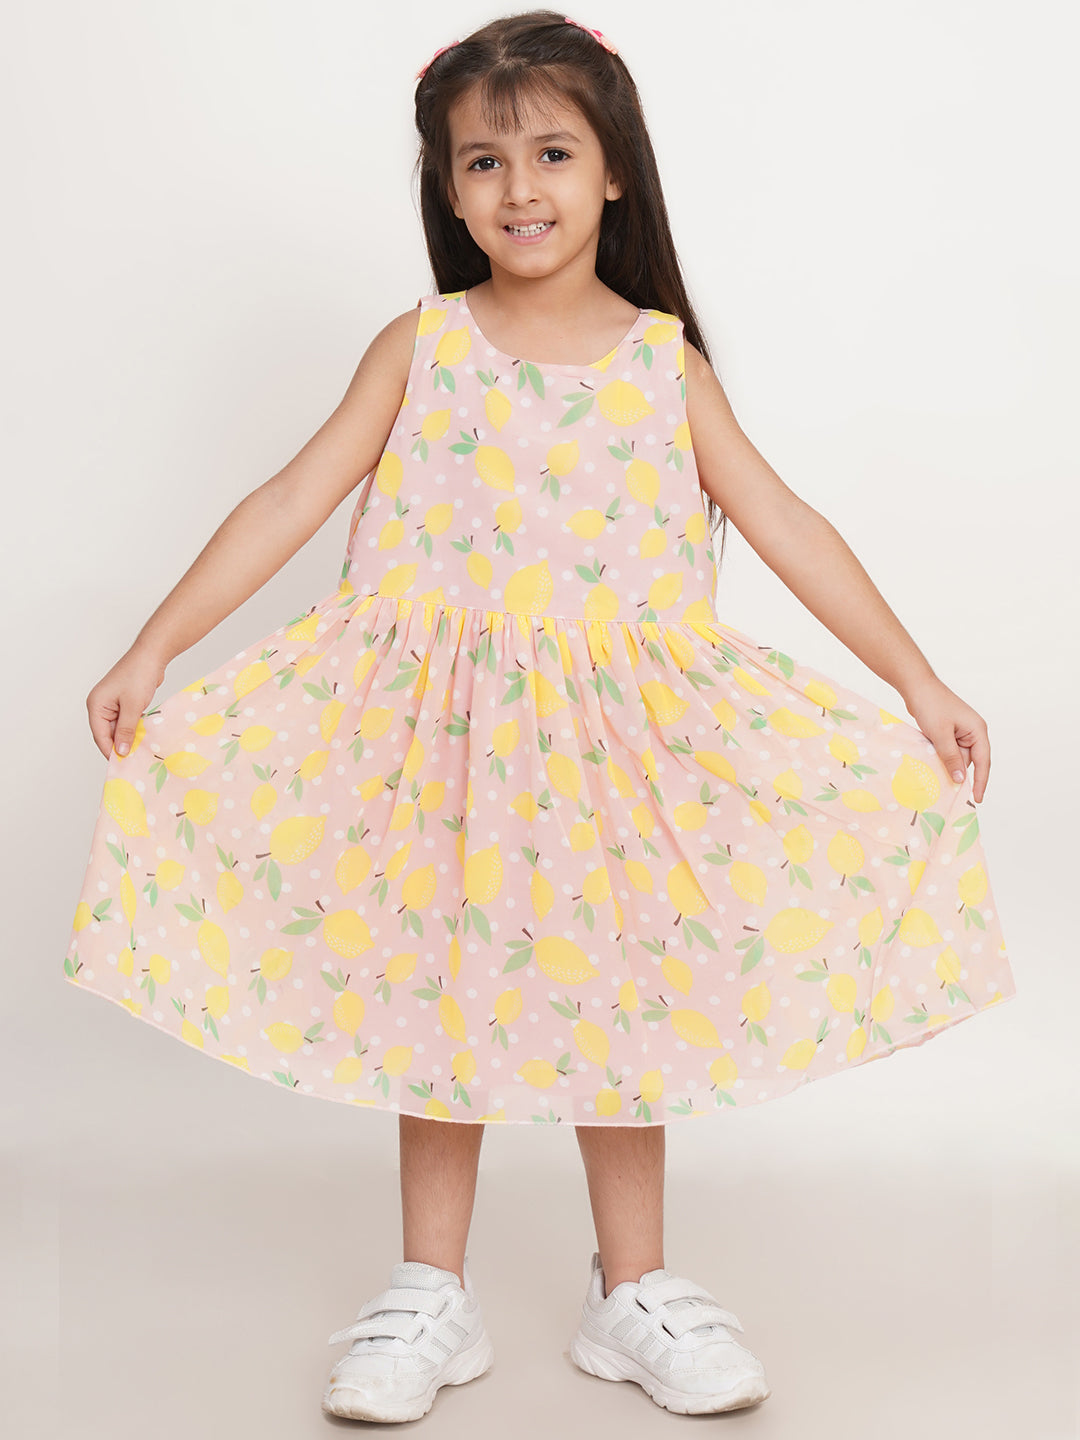 CREATIVE KID'S Girl Cream & Yellow Lemon Print A-Line Dress